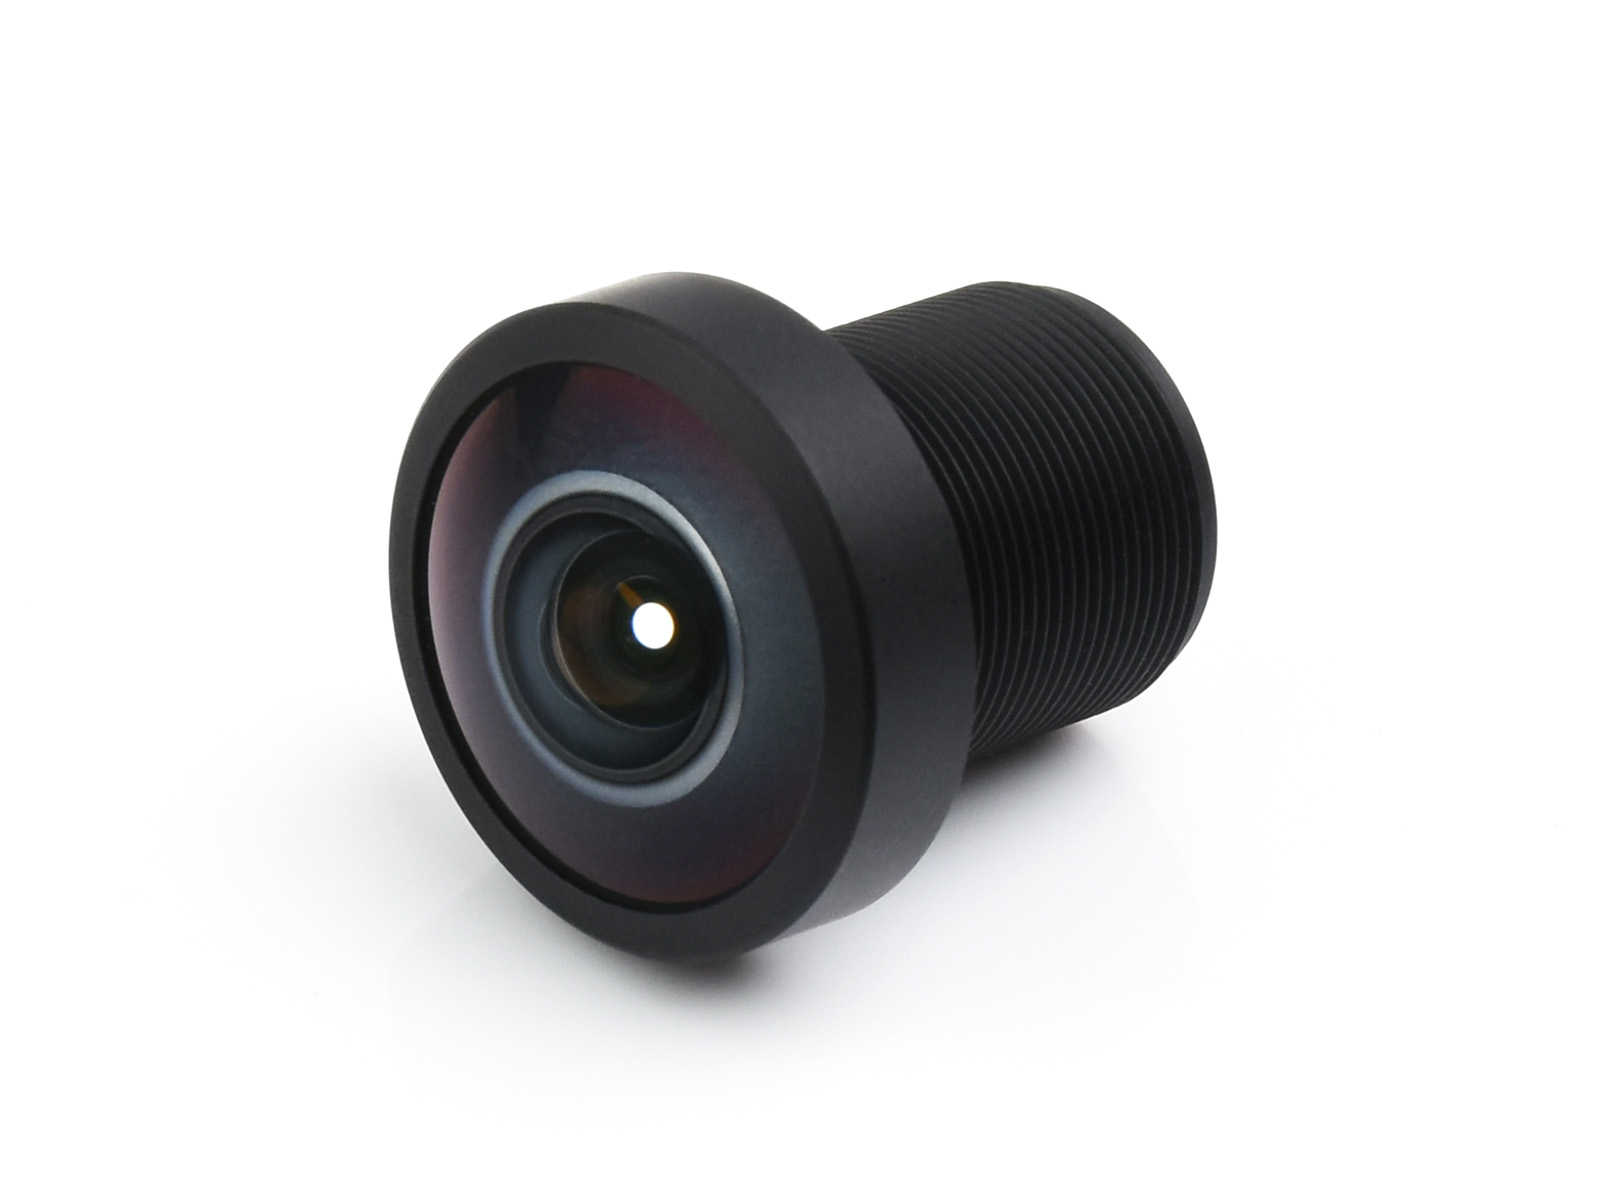 M12高分辨率镜头 1400万高清分辨率 184.6°超广角 2.72mm焦距 兼容Raspberry Pi HQ Camera M12